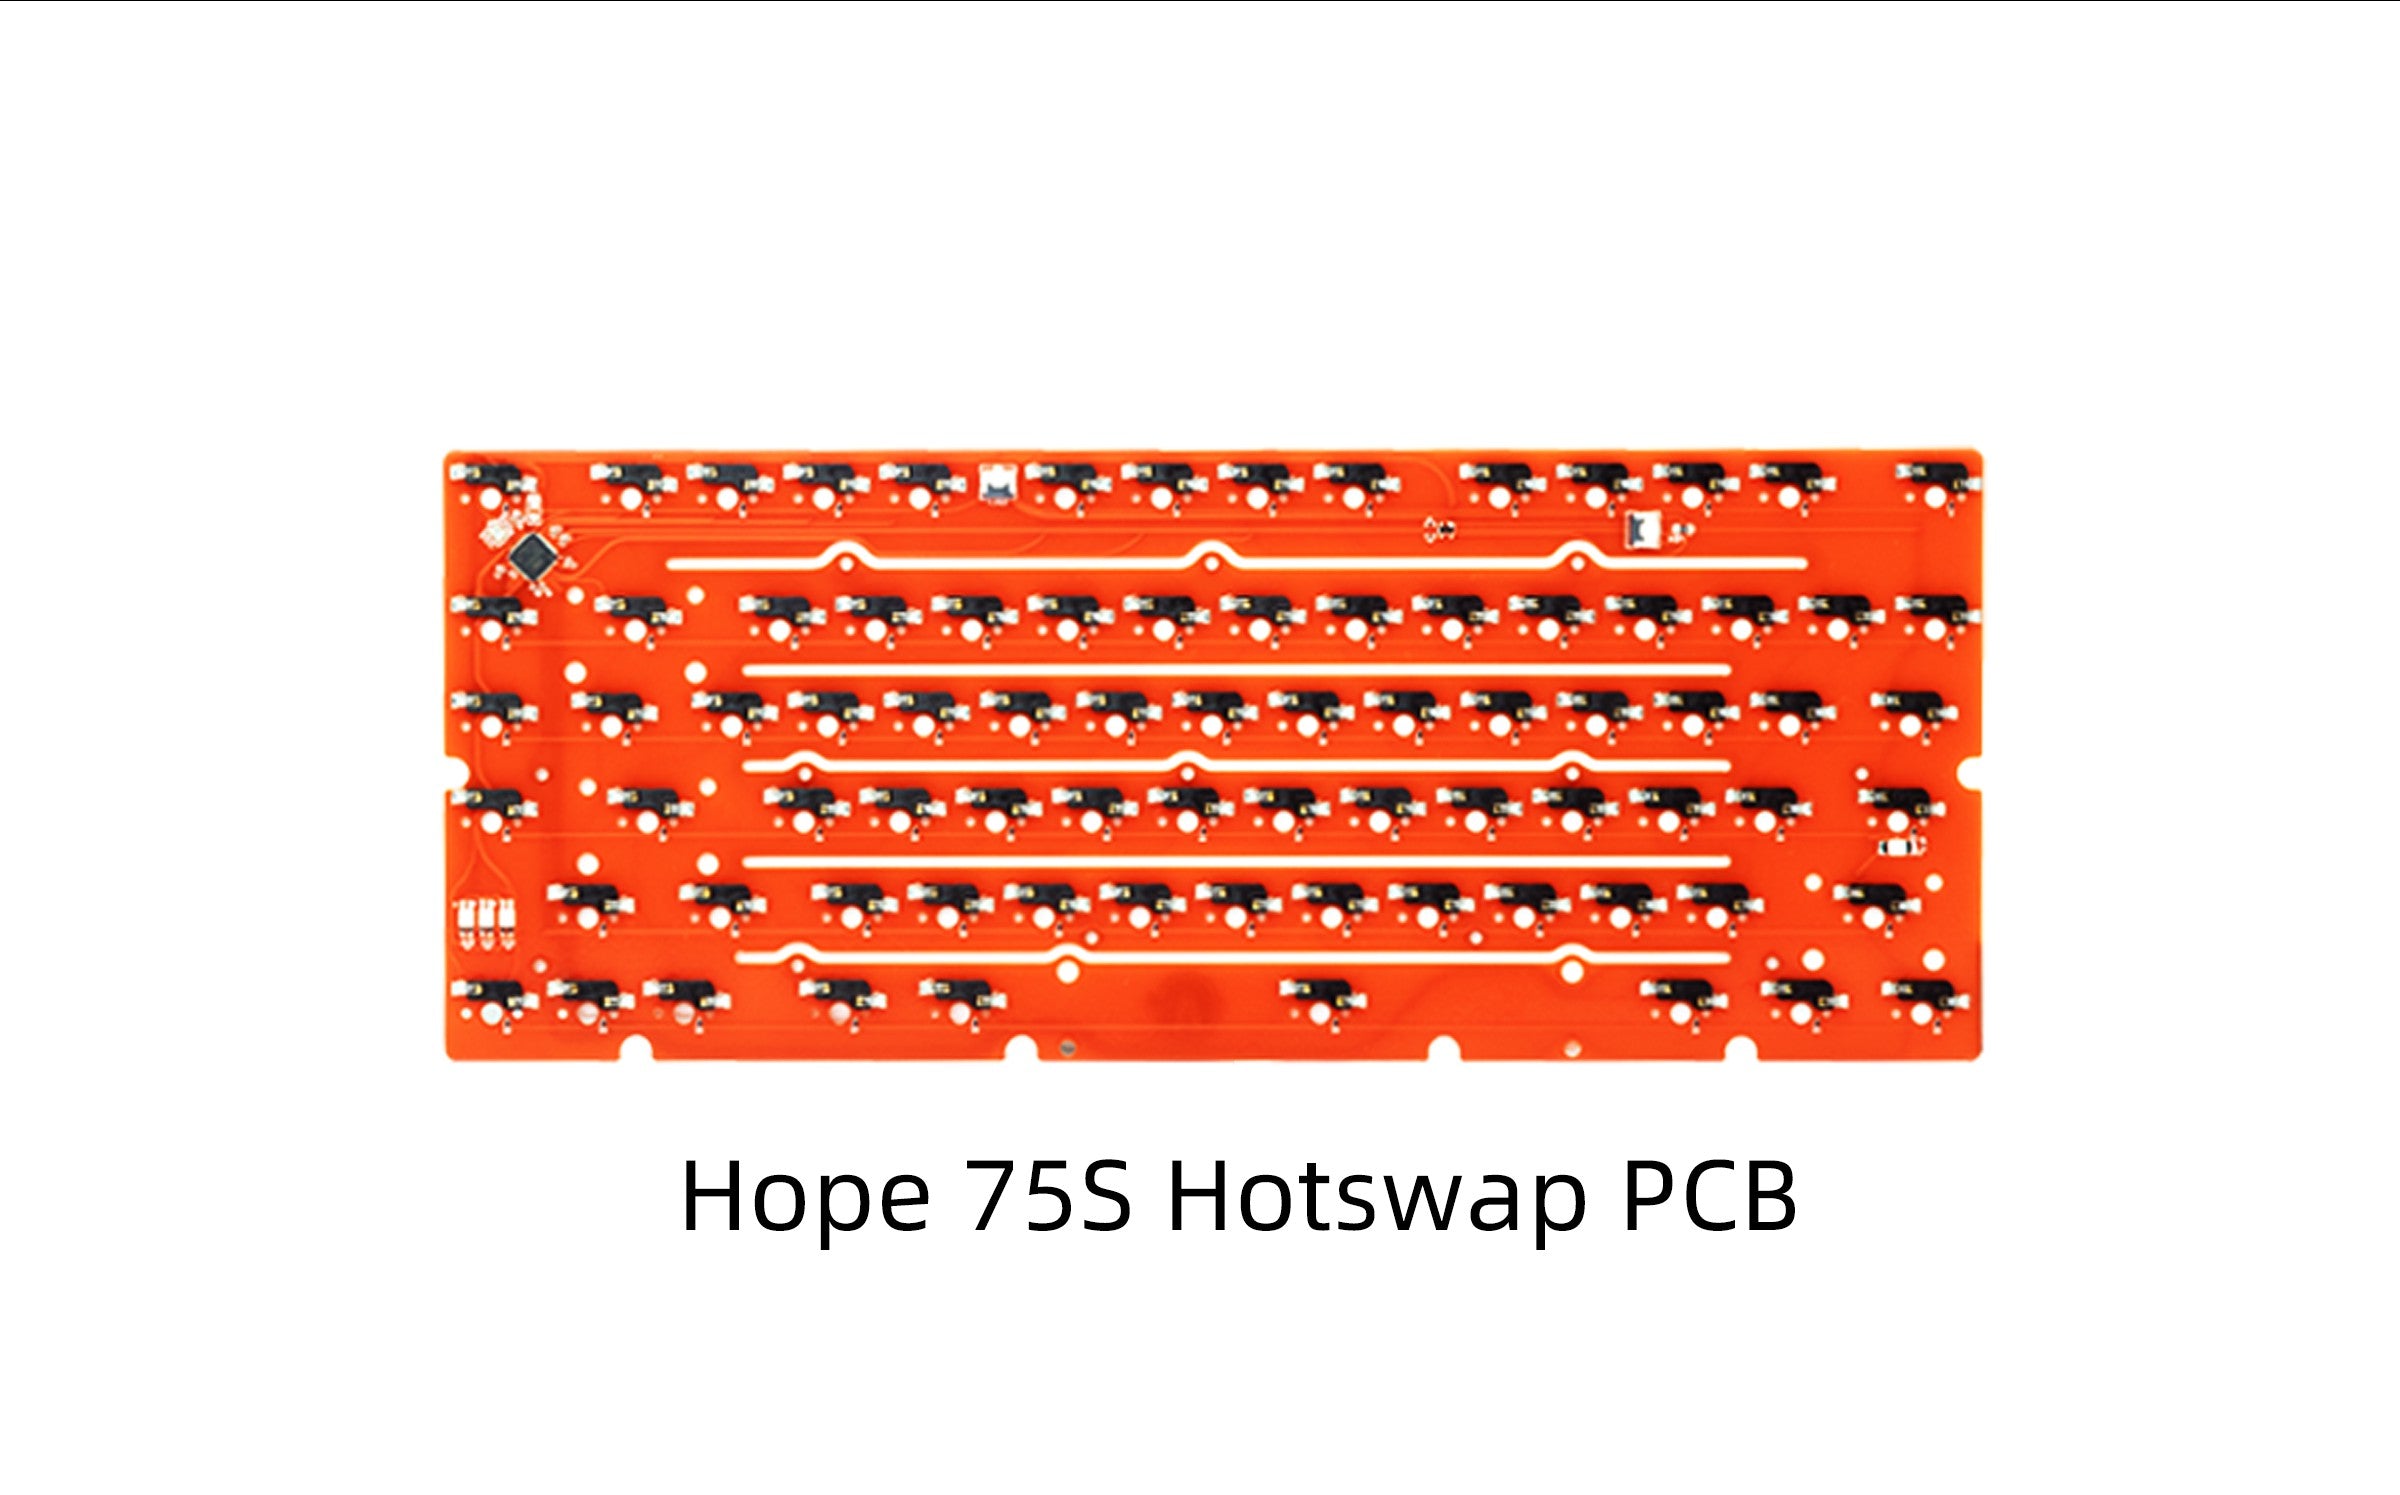 [EXTRA] HOPE75S HOTSWAP PCB (FREE SHIPPING)